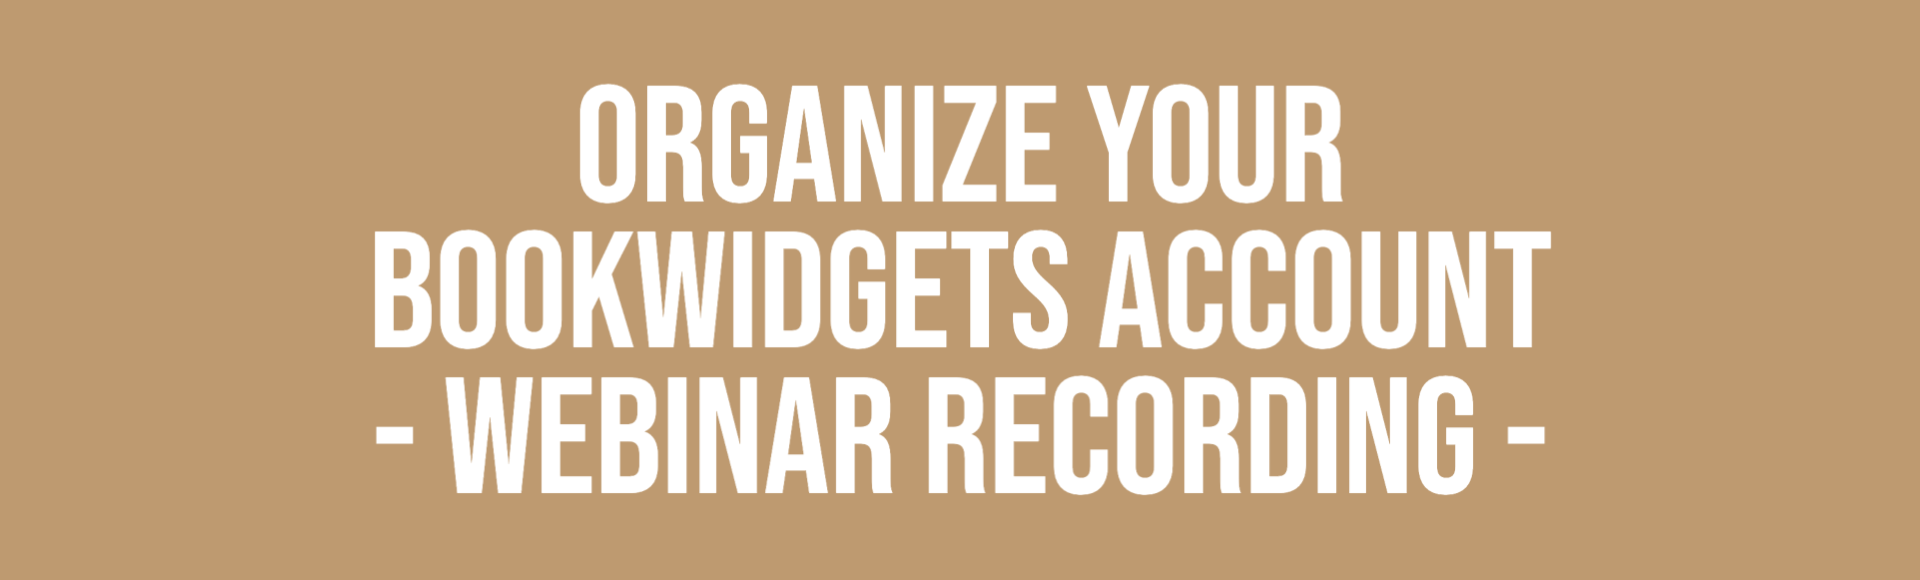 webinar organize your bookwidgets account